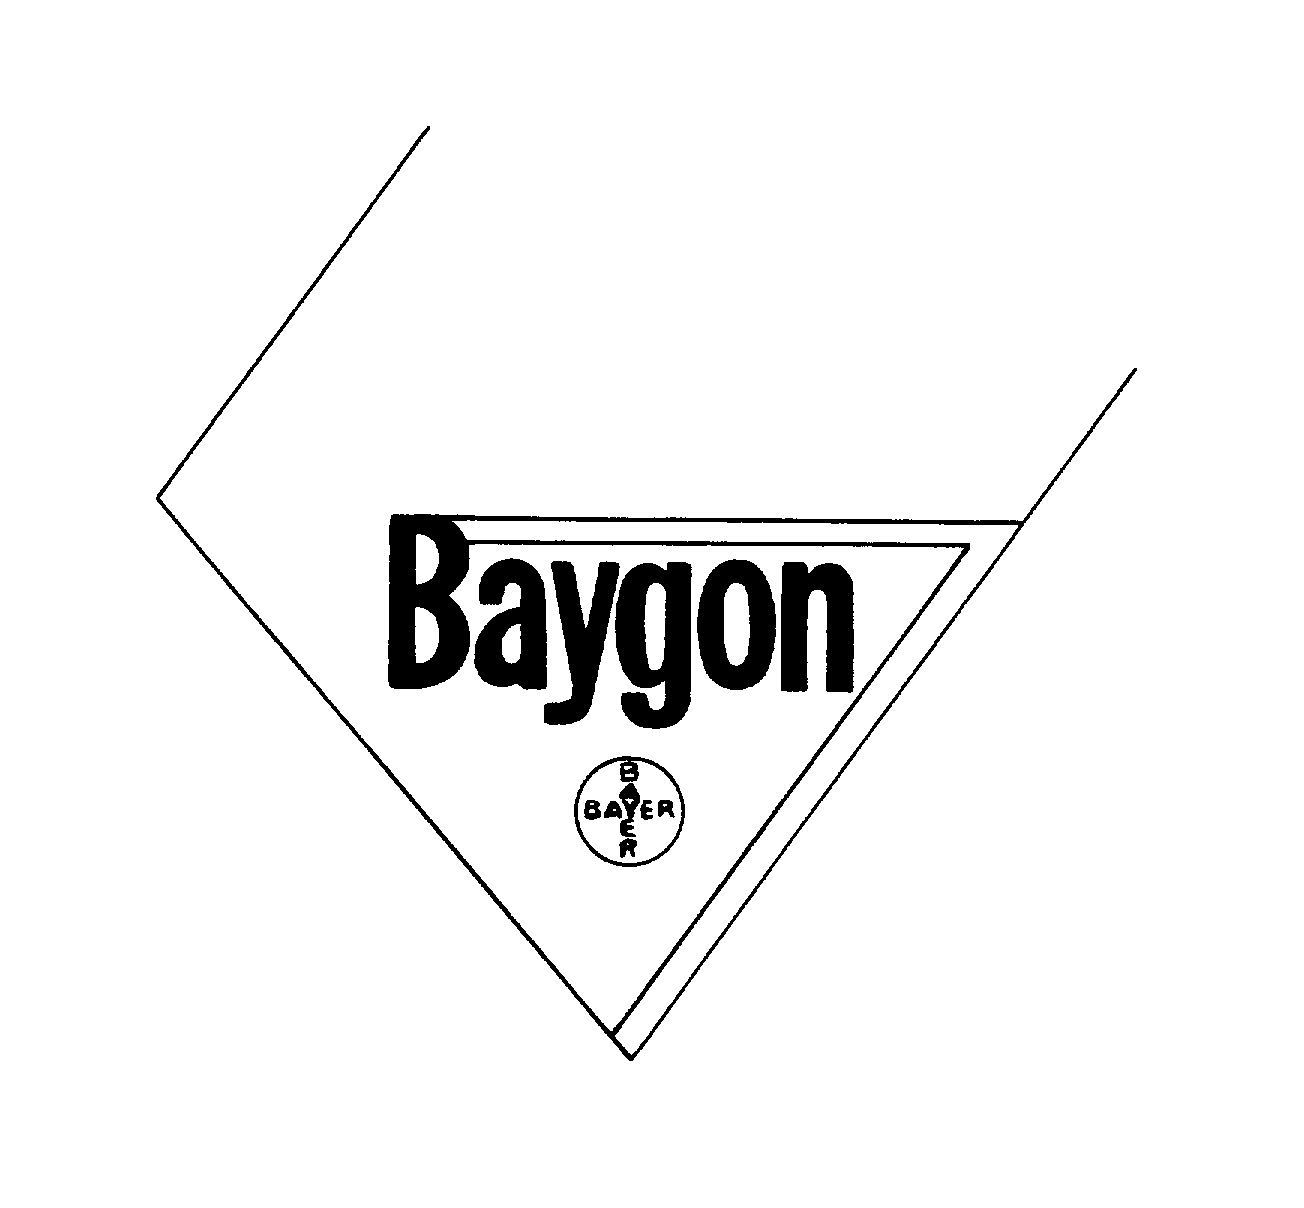  BAYGON BAYER